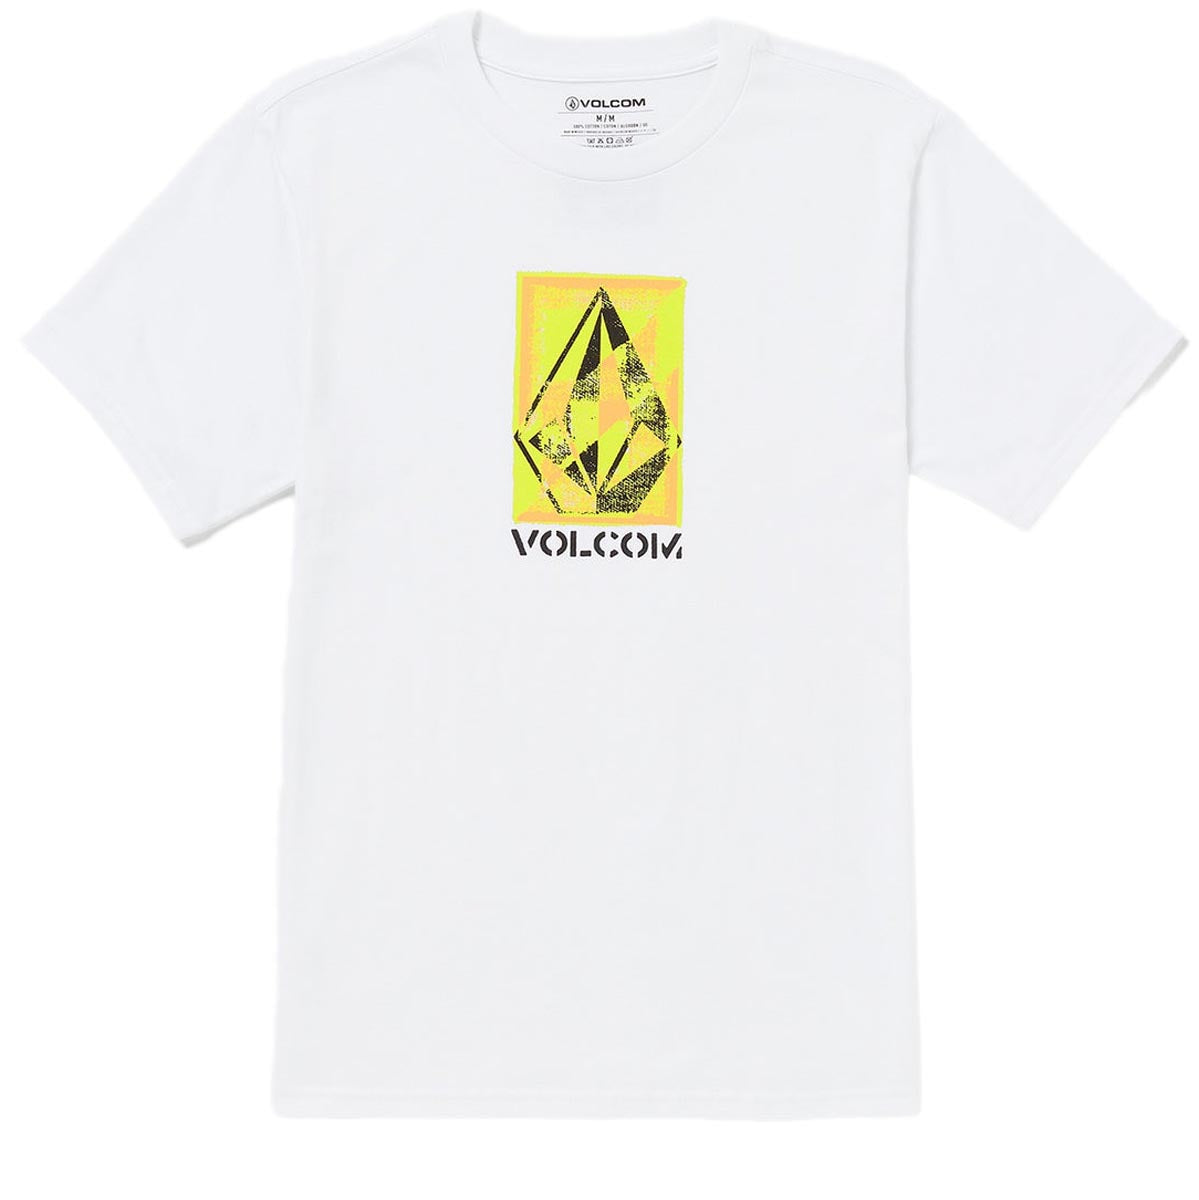 Volcom Ripper Stone T-Shirt - White image 1